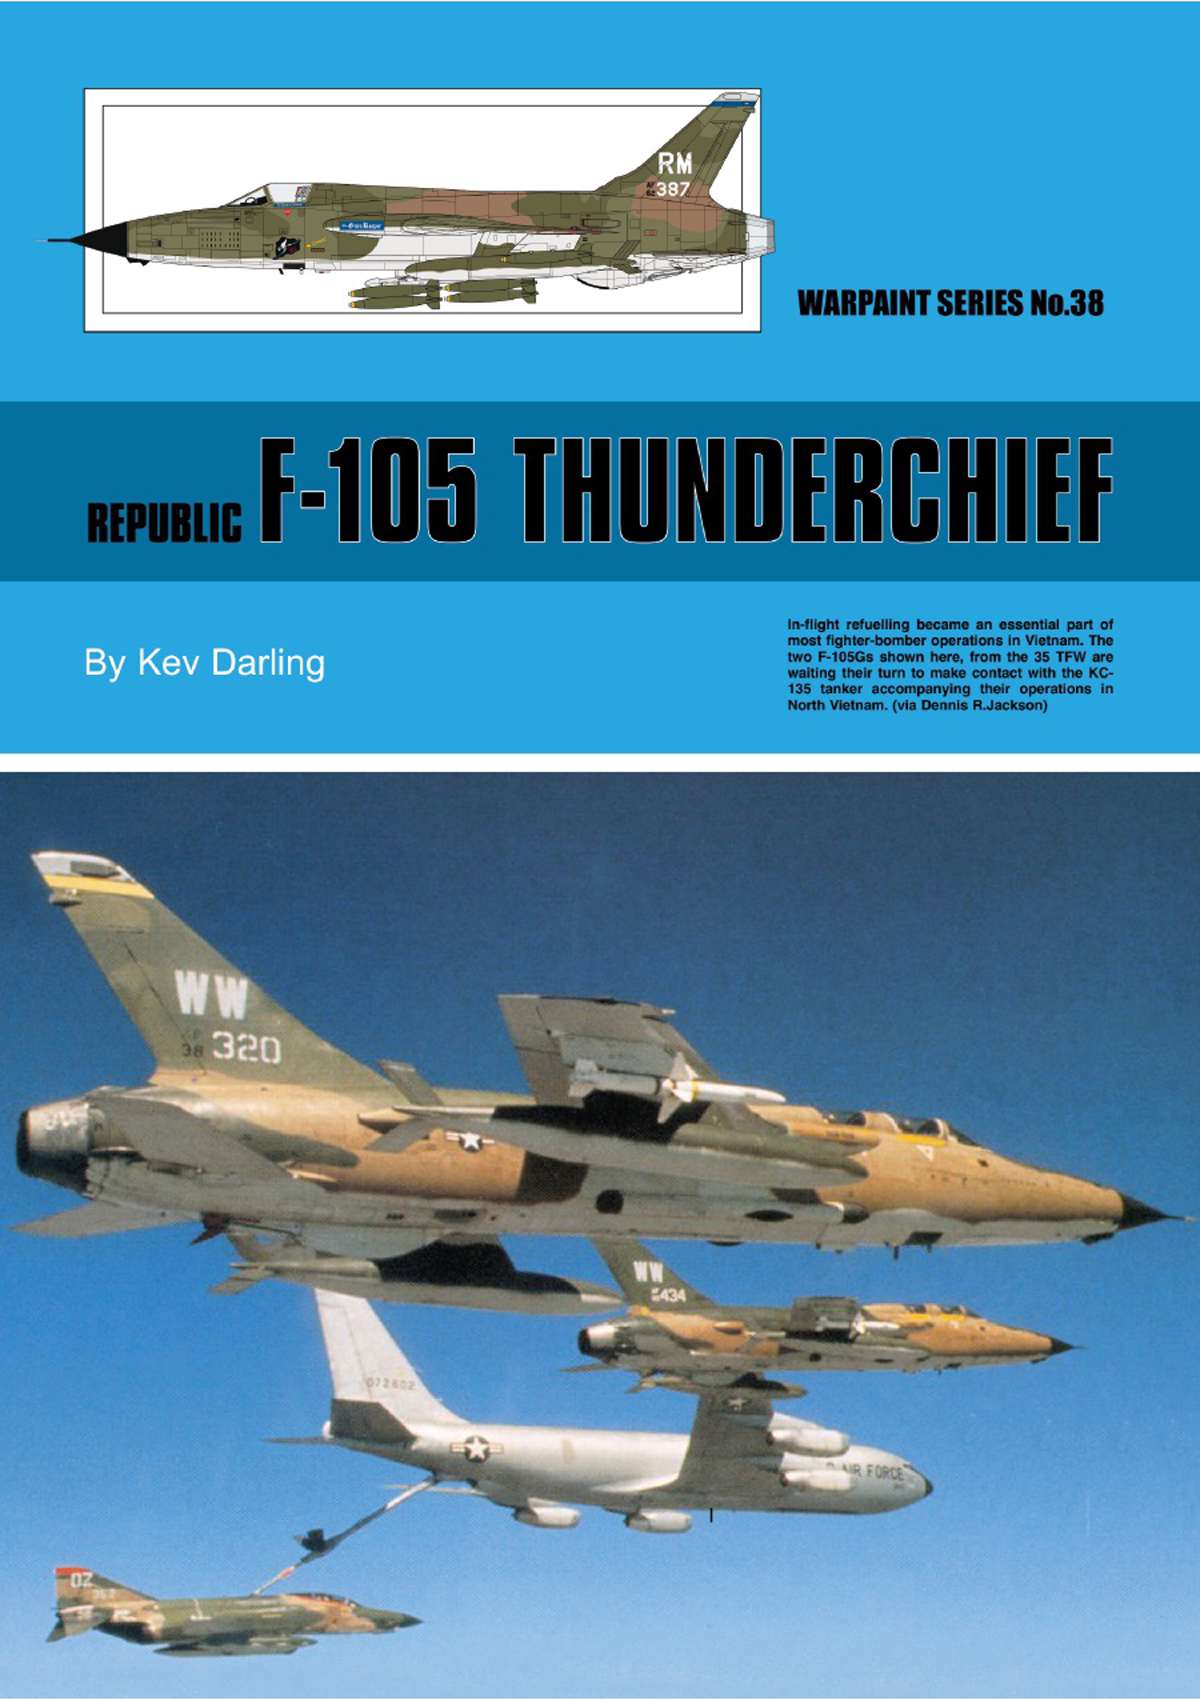 N38 - Republic F-105 Thunderchief